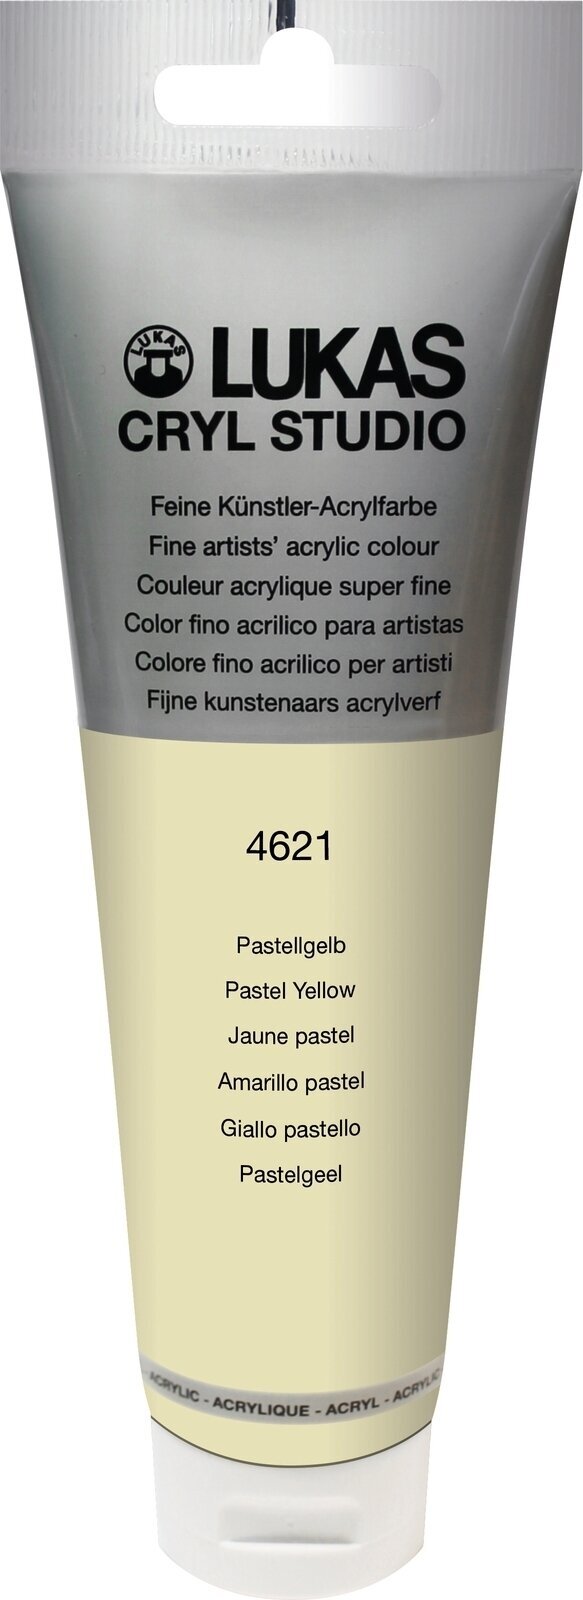 Farba akrylowa Lukas Cryl Studio Acrylic Paint Plastic Tube Farba akrylowa Pastel Yellow 125 ml 1 szt